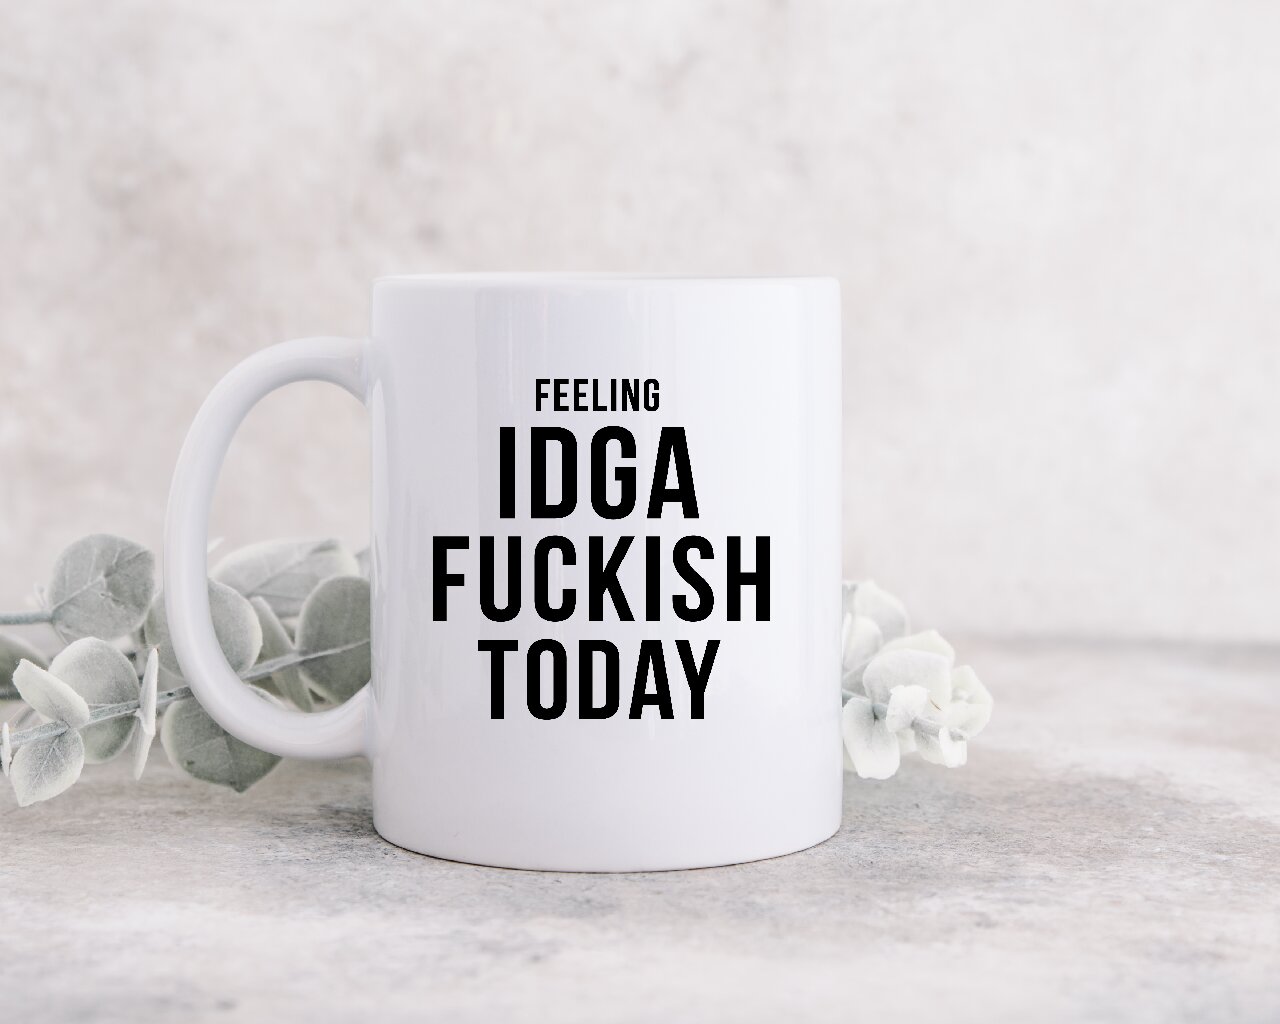 Feeling IDGA Fuckish Today - 15oz/425mlCoffee Mug